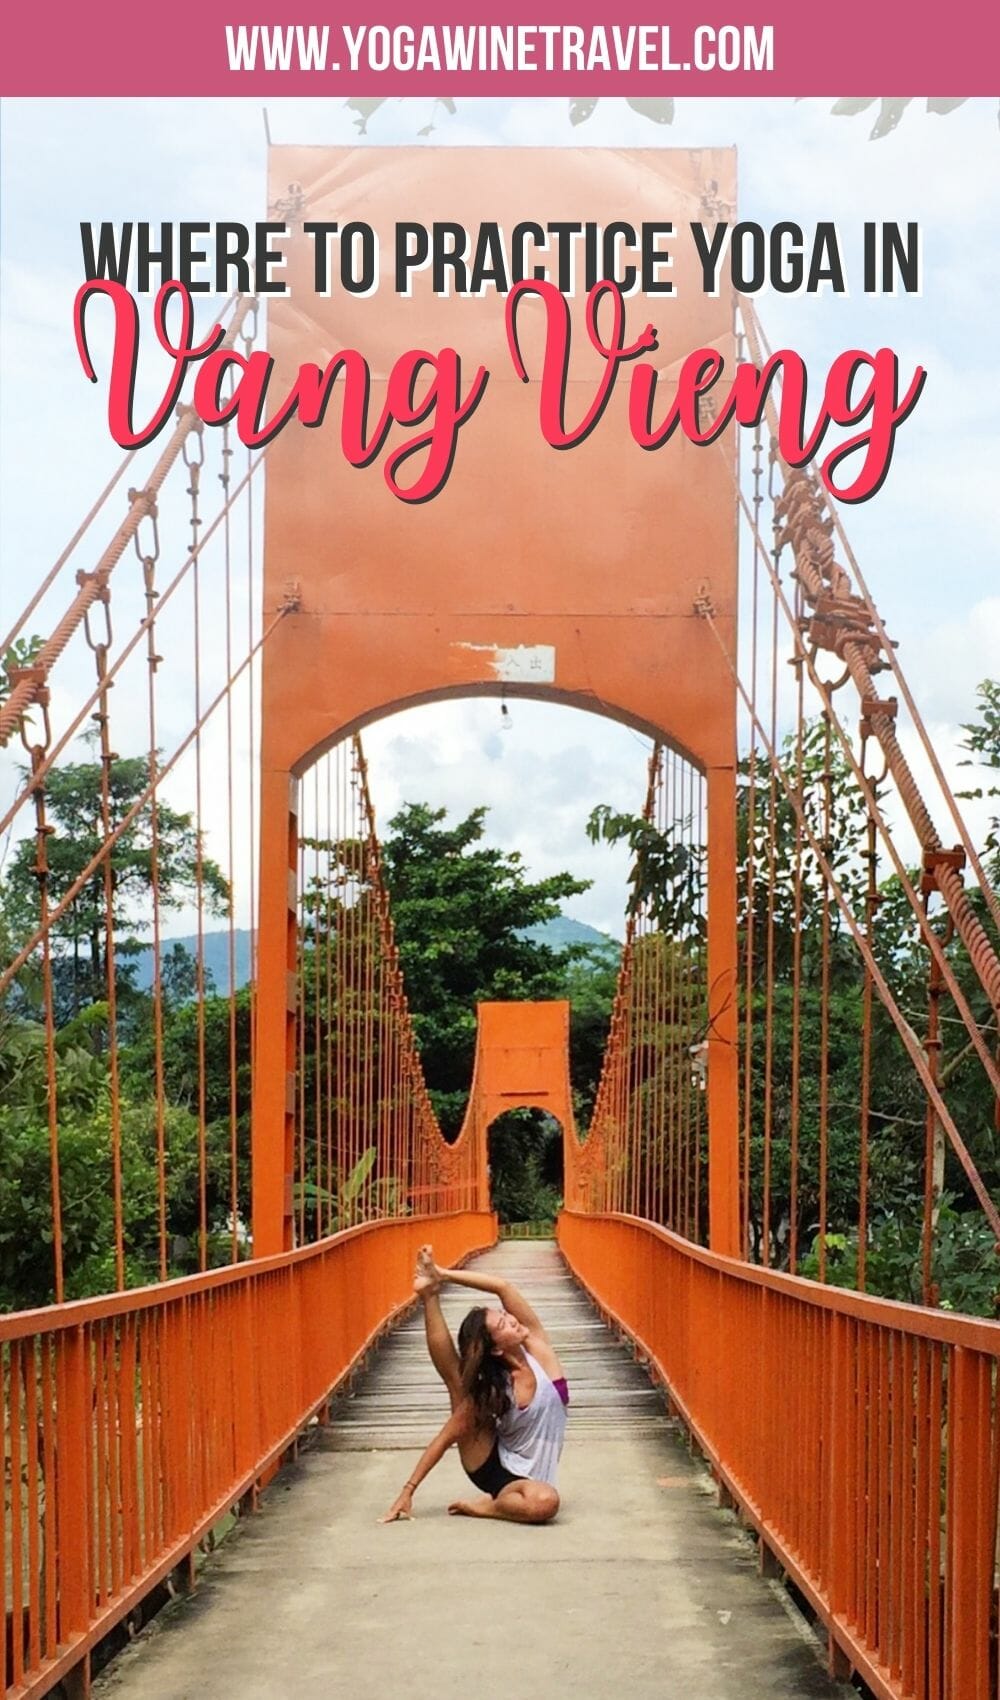 Woman on orange bridge in Vang Vieng Laos with text overlay